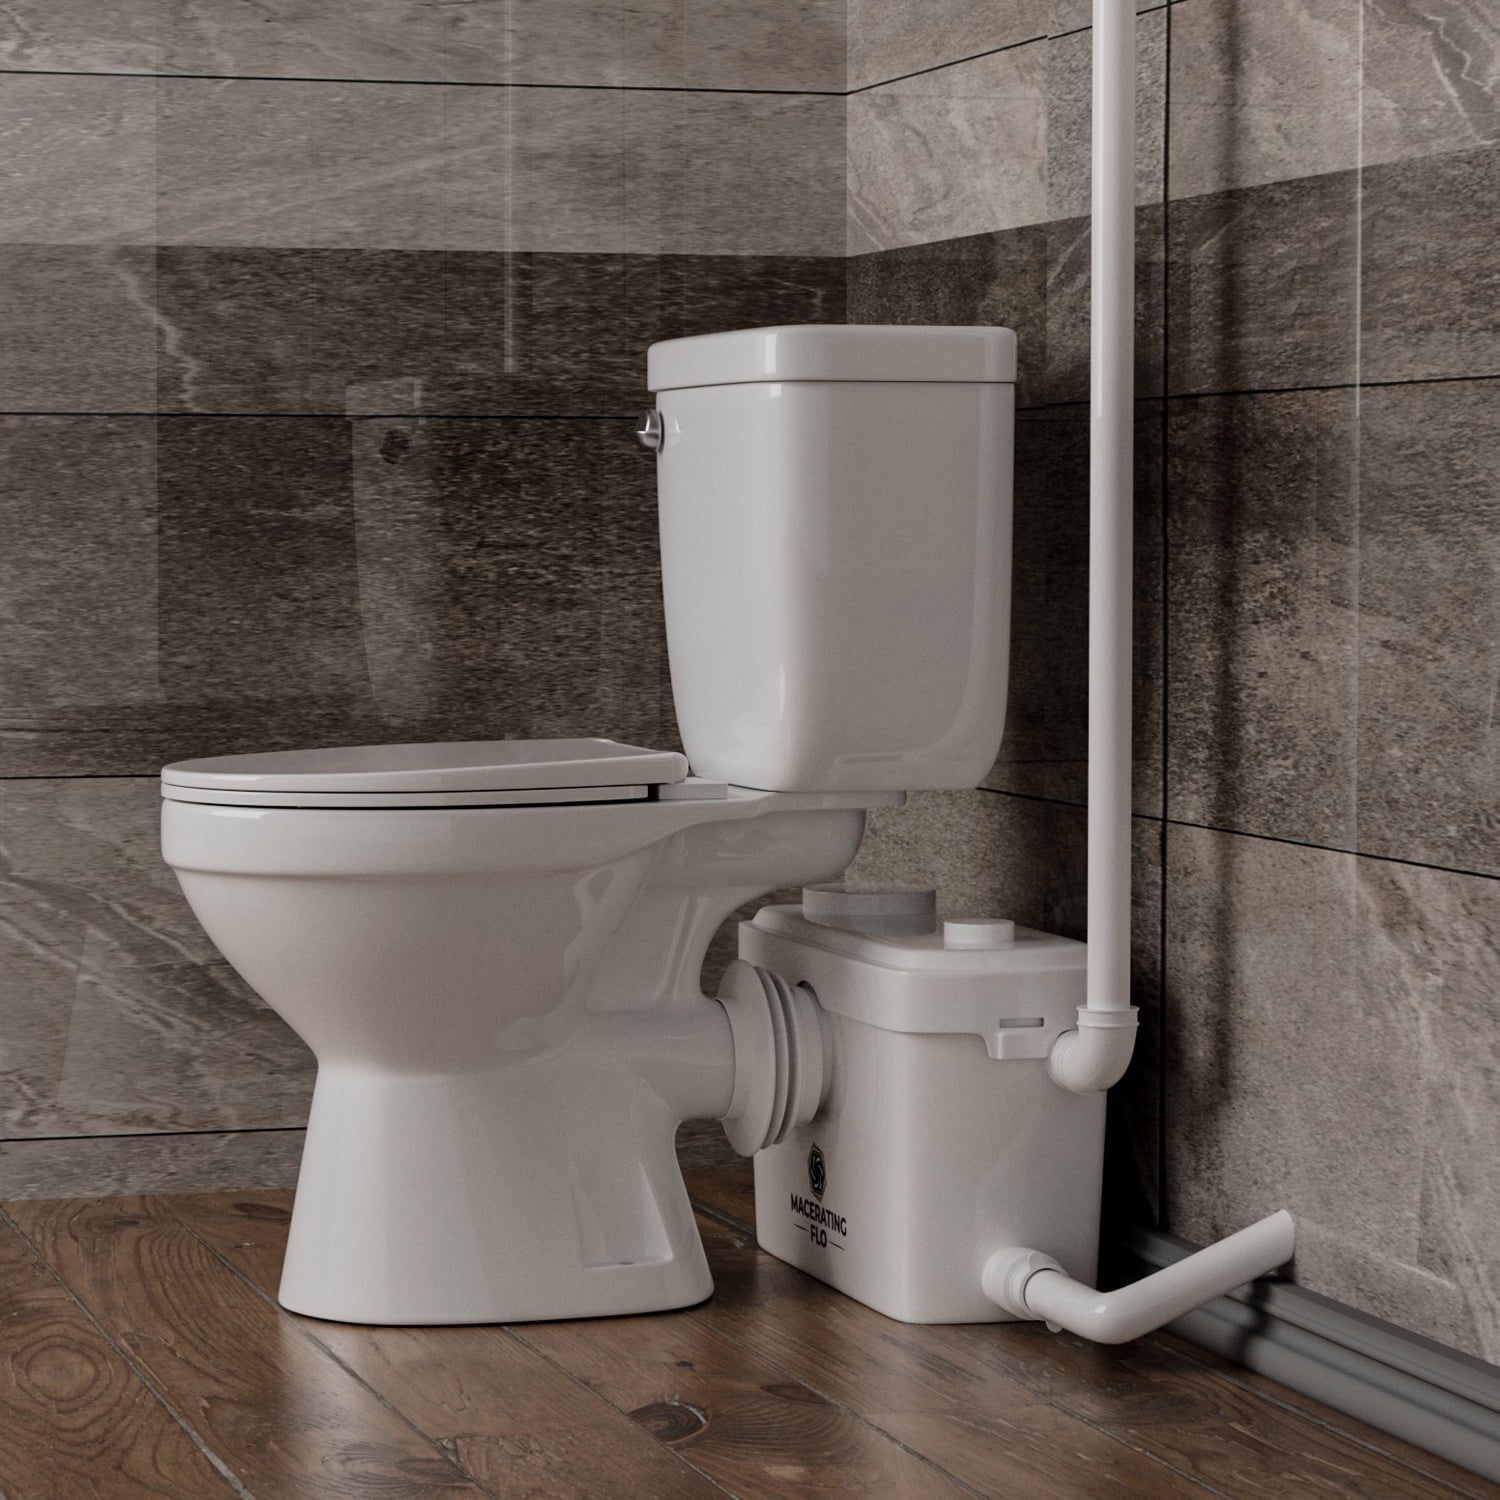 MaceratingFlo Pro 600W Macerating Toilet